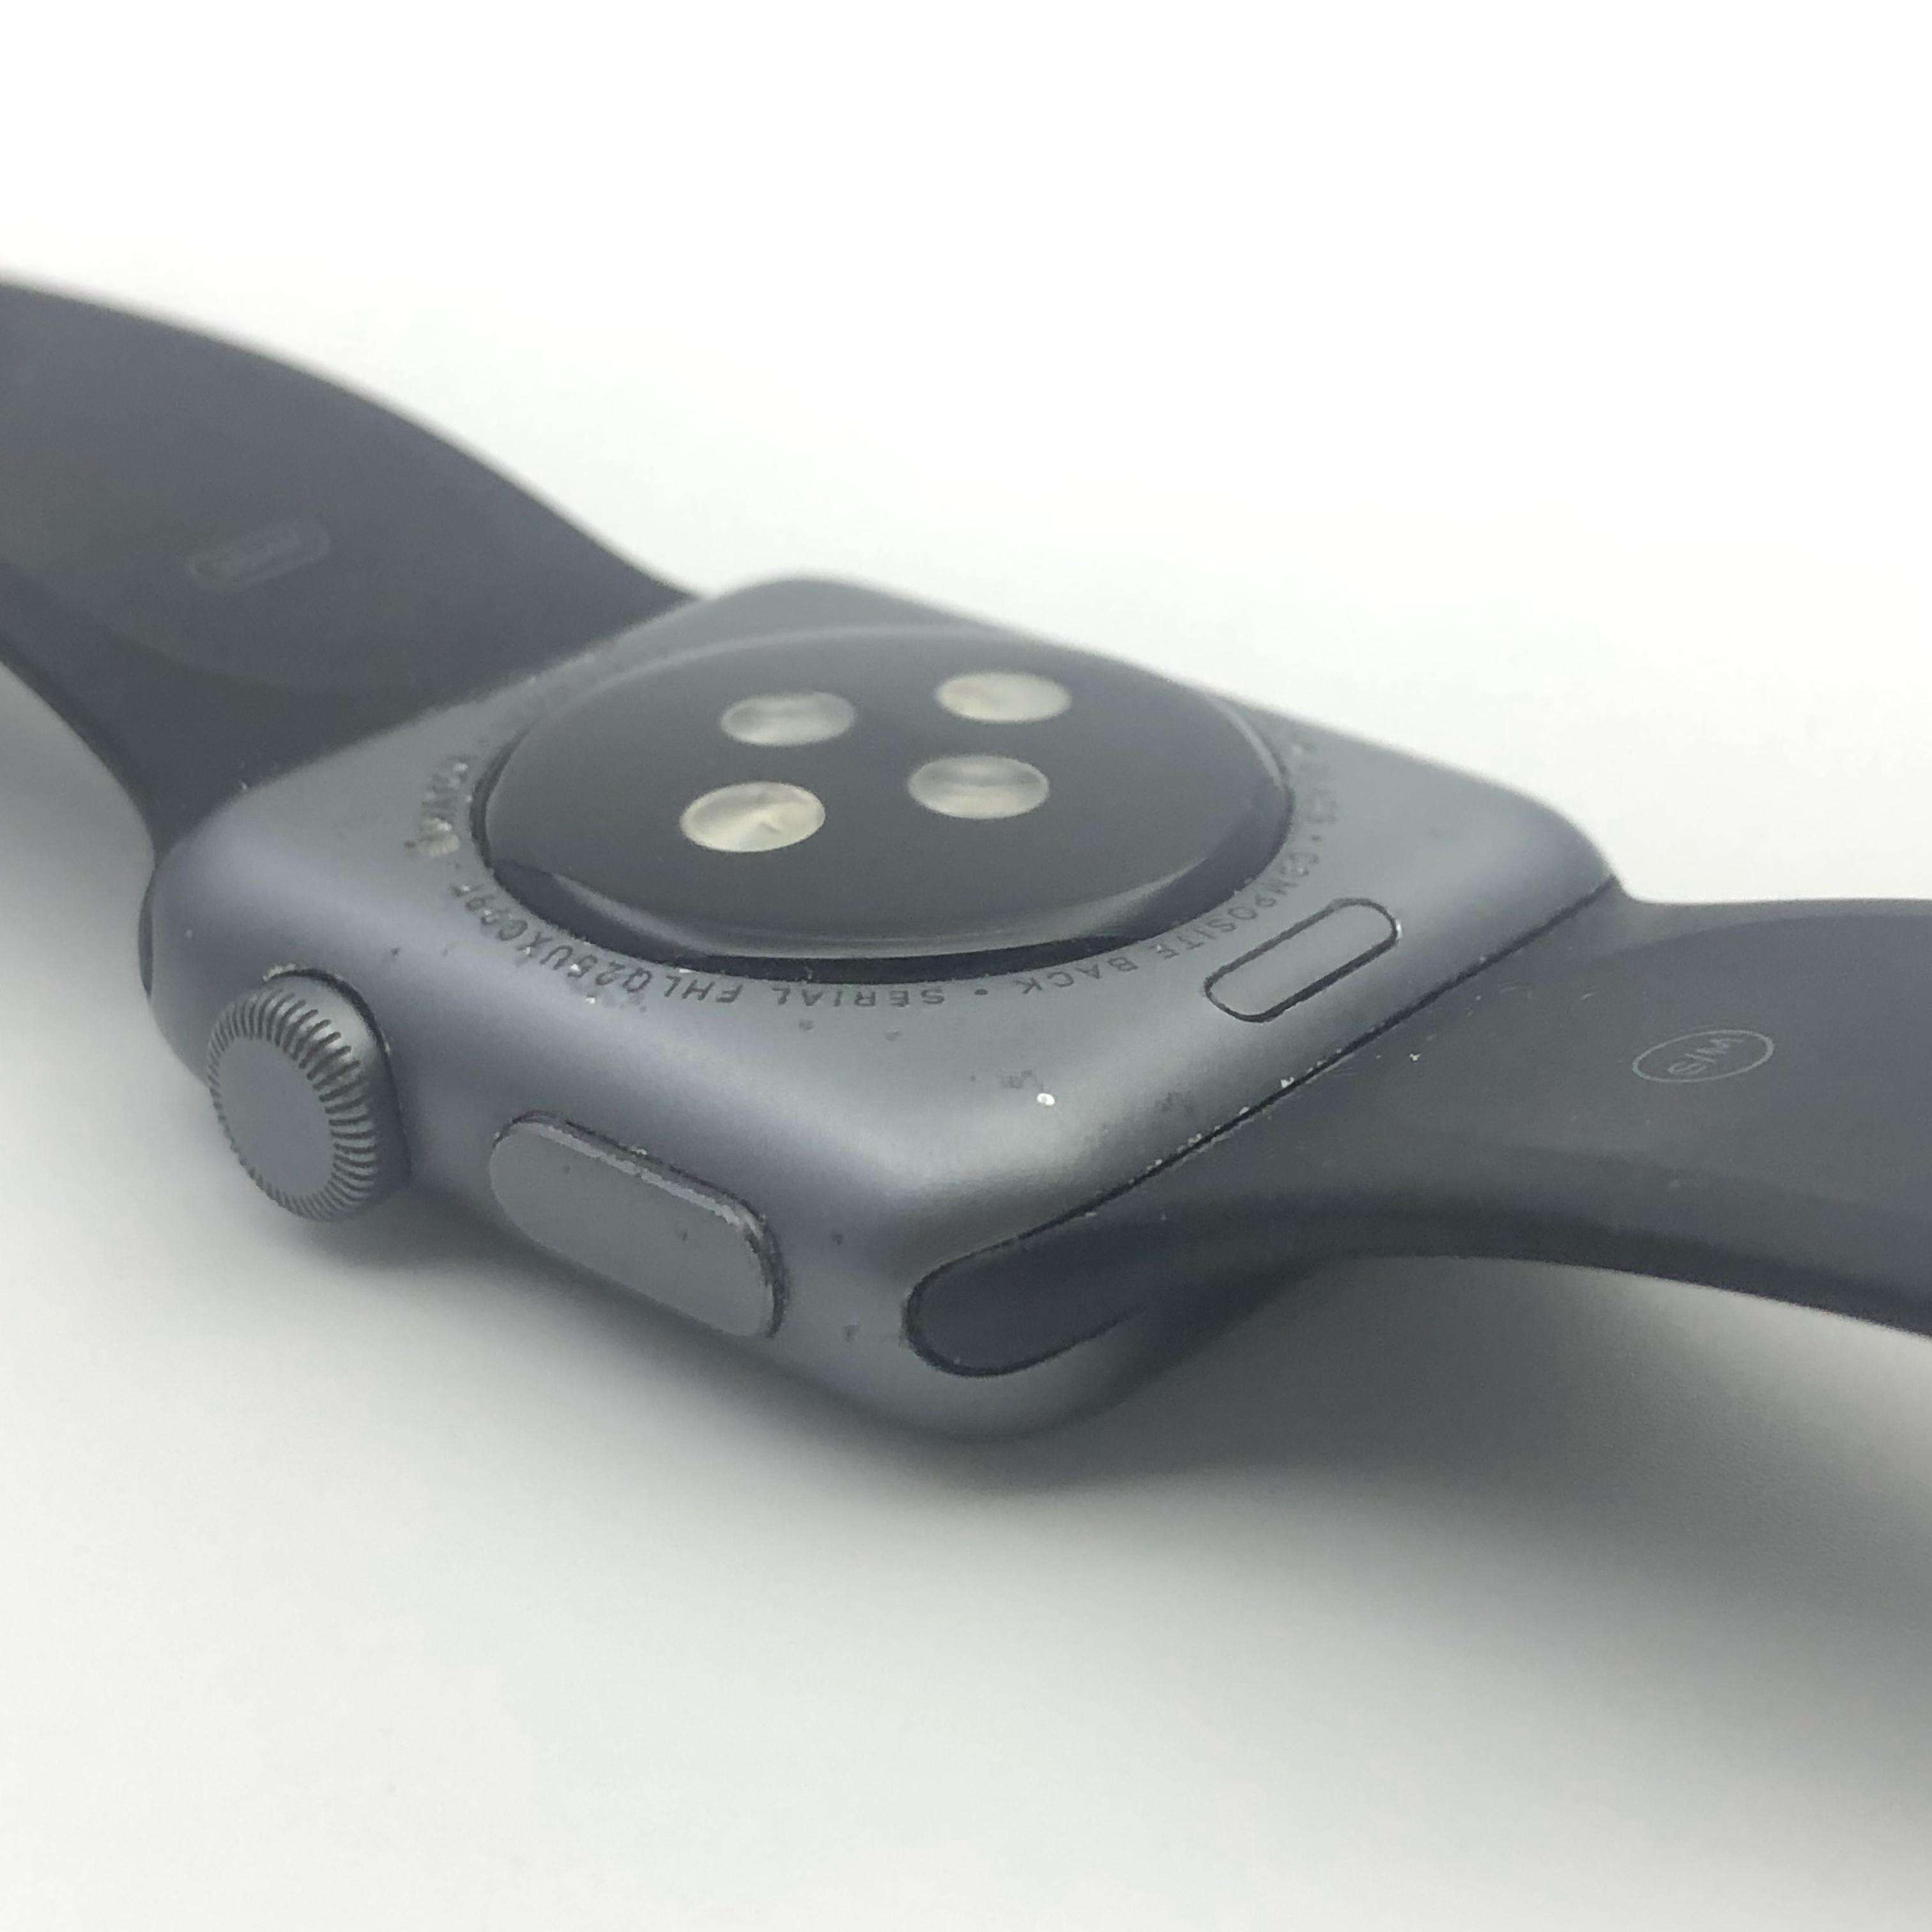 Apple Watch 初代铝金属表壳 38MM 国行GPS版